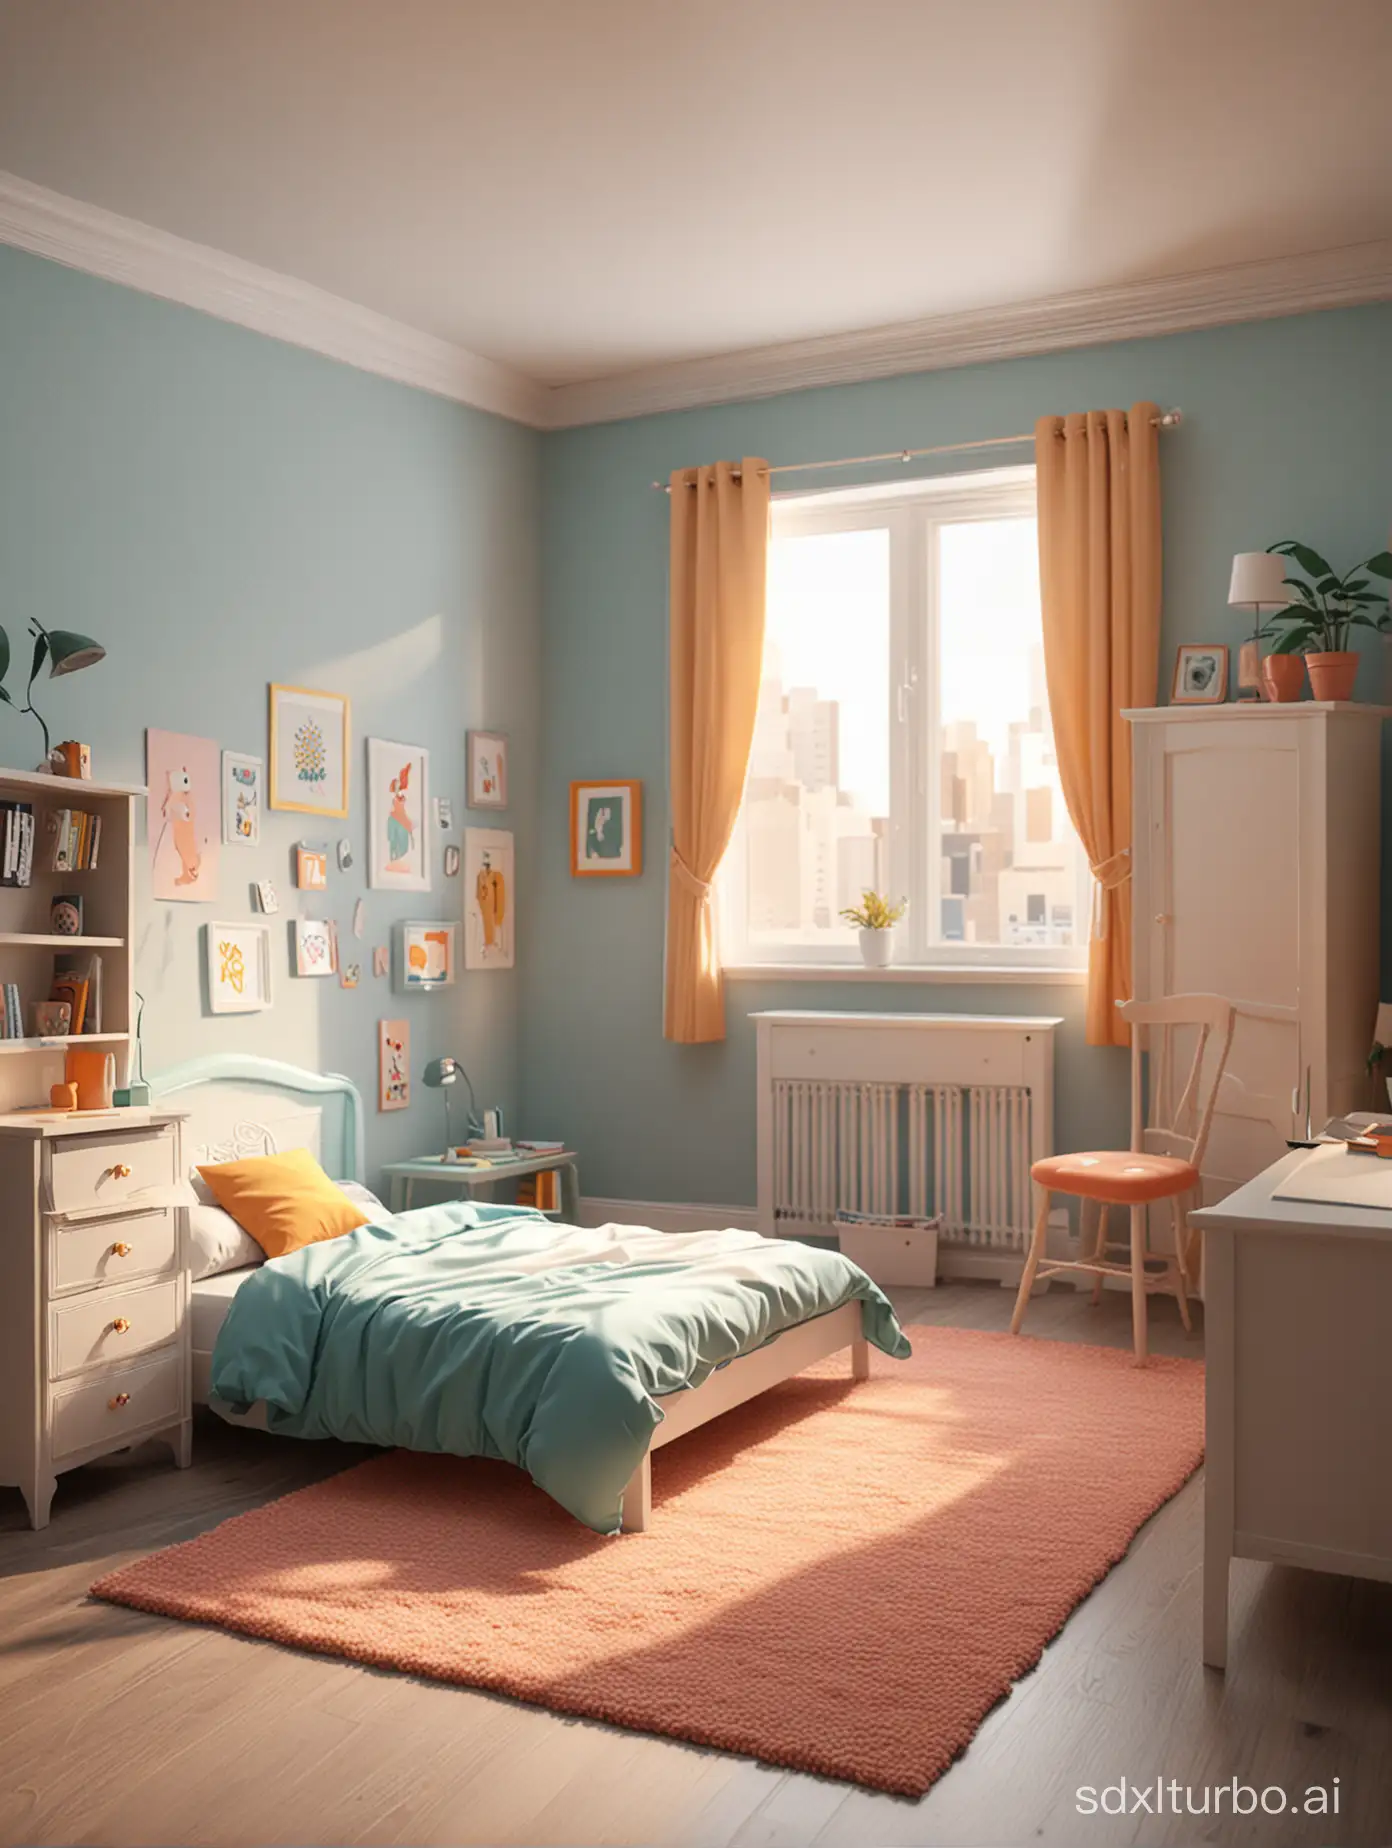 A 3D cartoon-style bedroom scene.